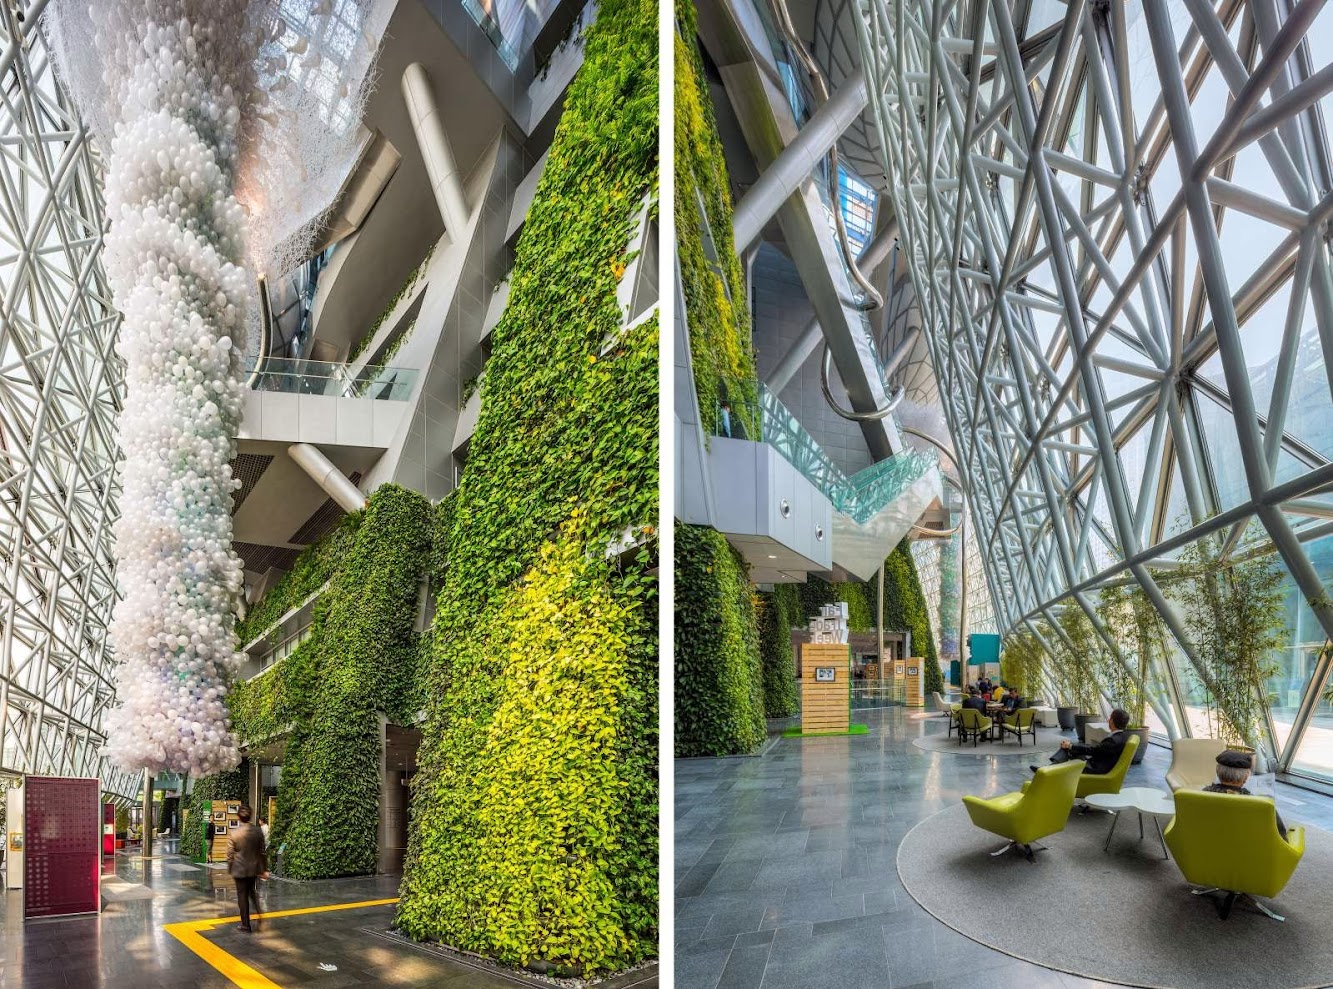 Seoul New City Hall by iArc Architects